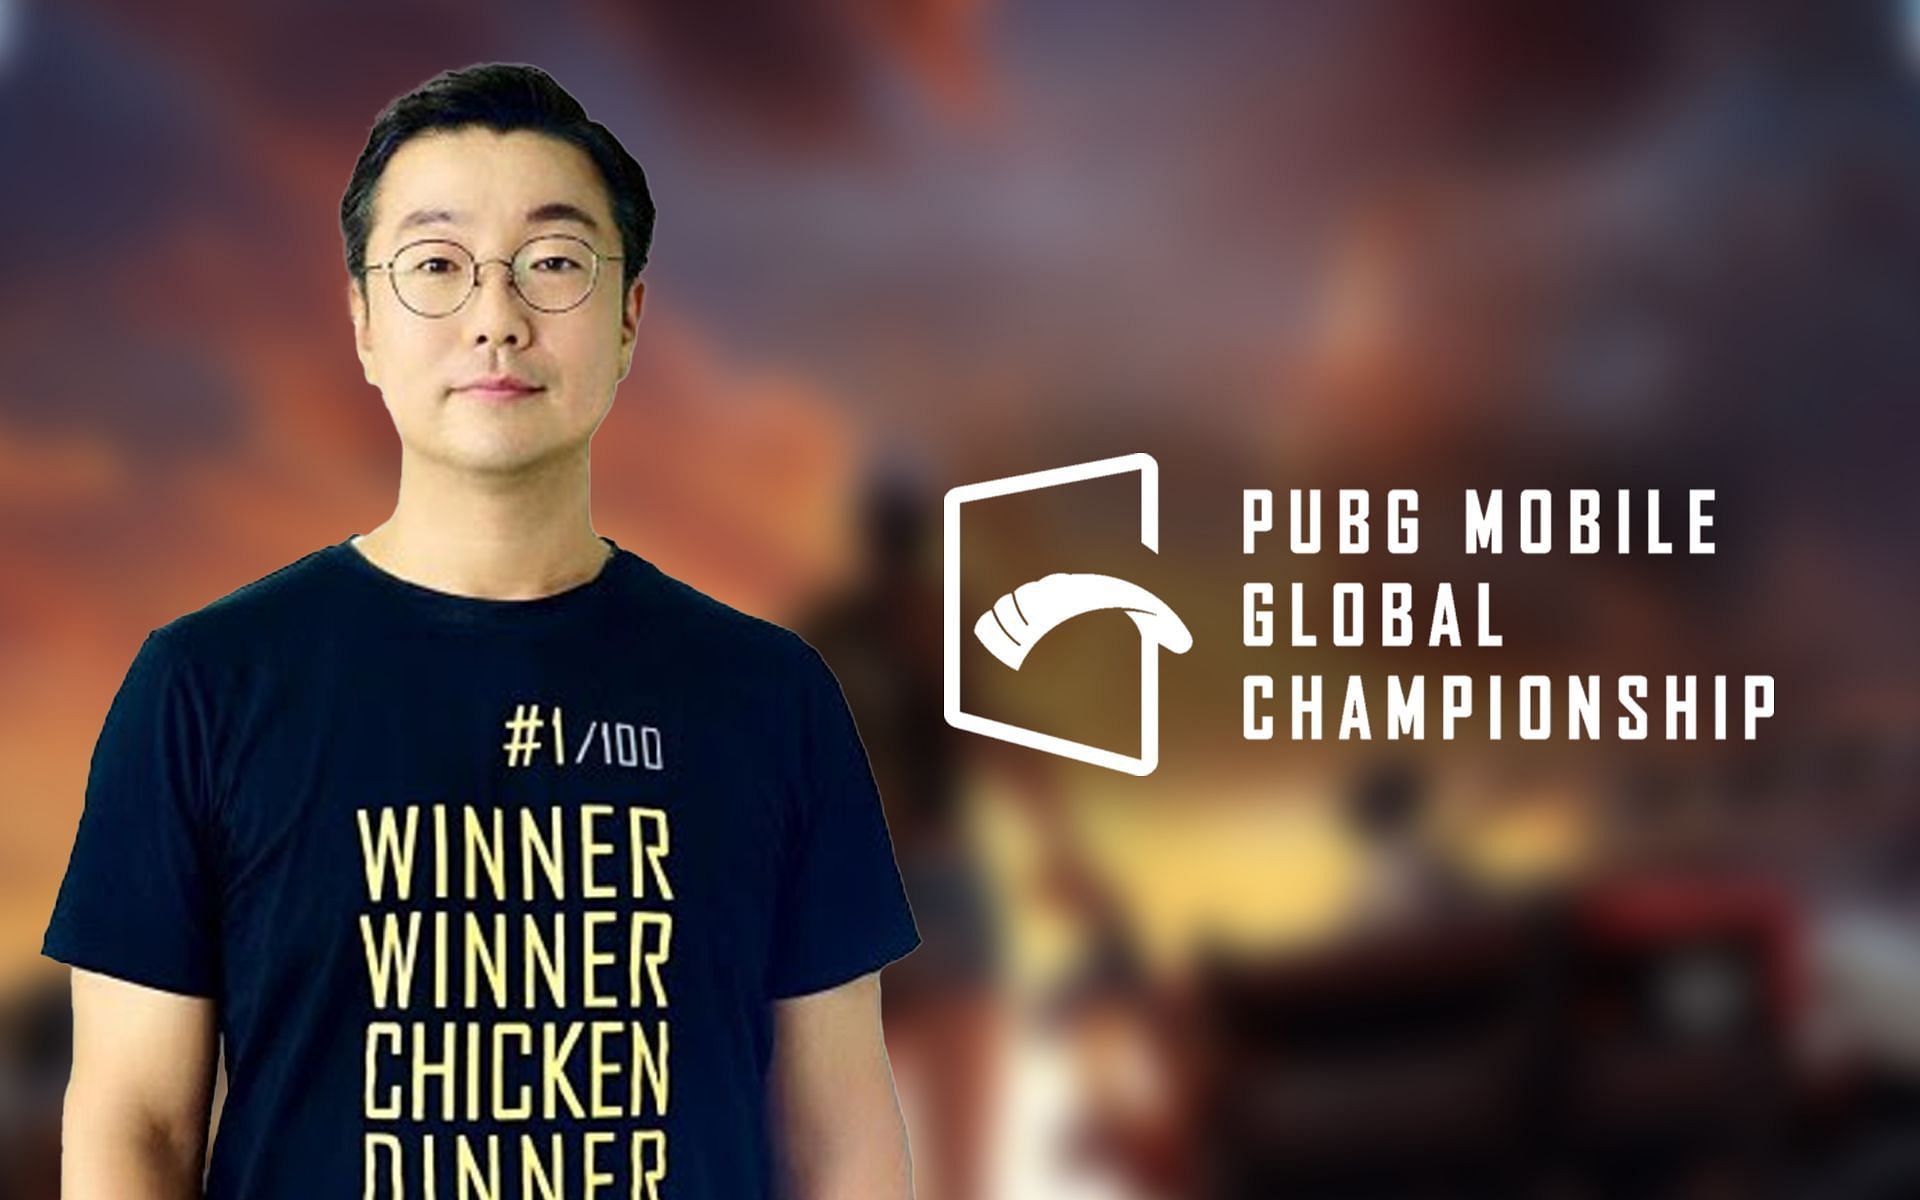 James Yang, the Director of PUBG Mobile Global Esports (Image via Sportskeeda)